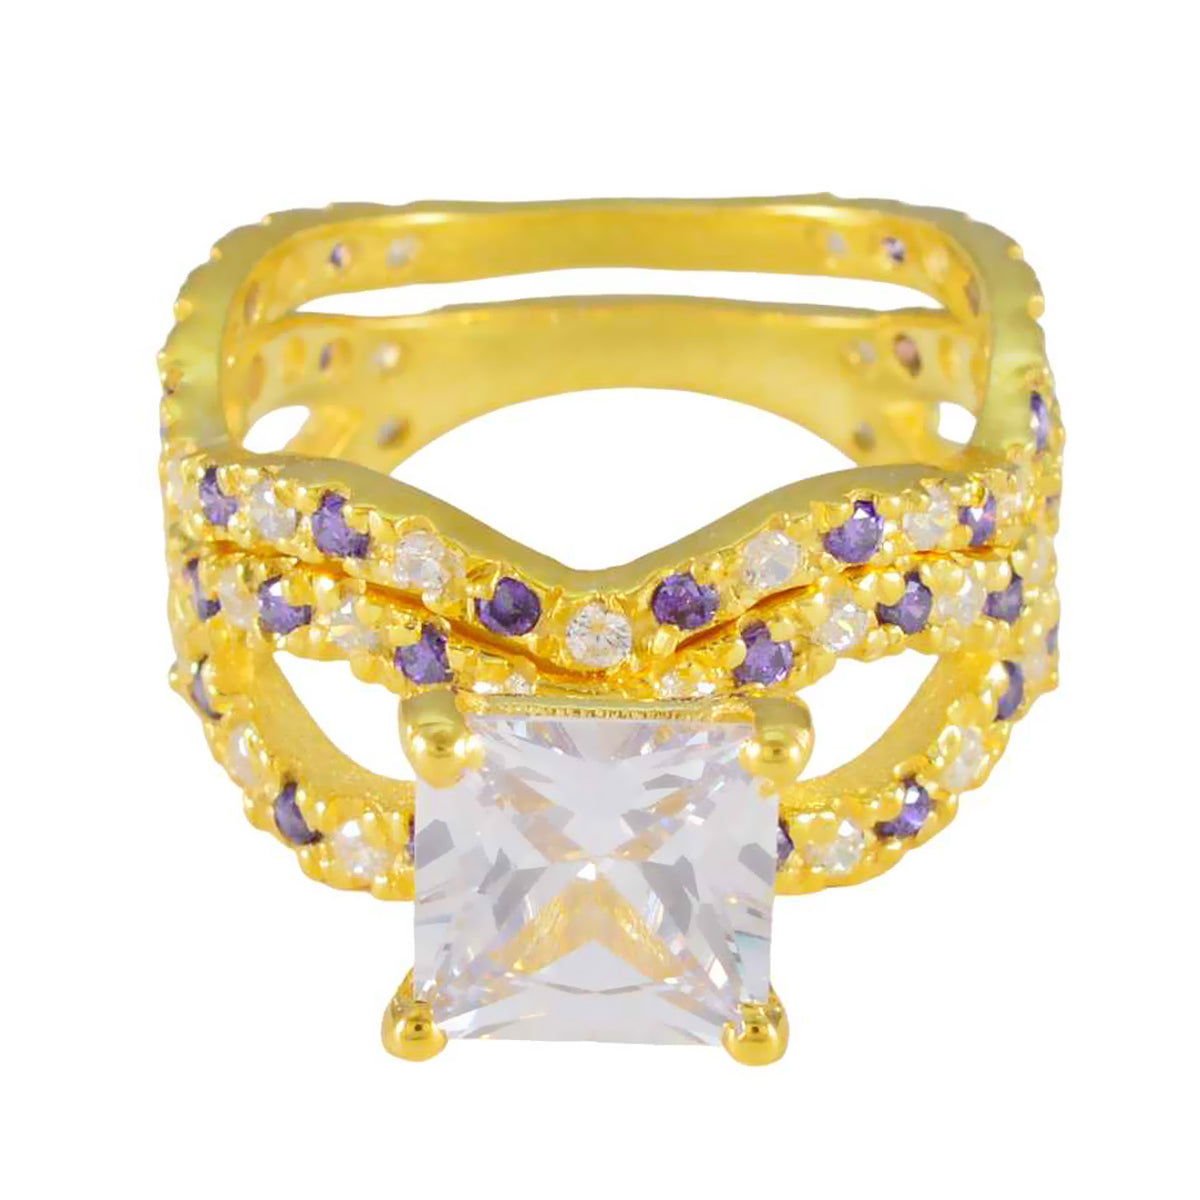 Riyo Charmante zilveren ring met geelgouden amethiststeen vierkante vorm Prong-instelling Handamde sieraden verlovingsring